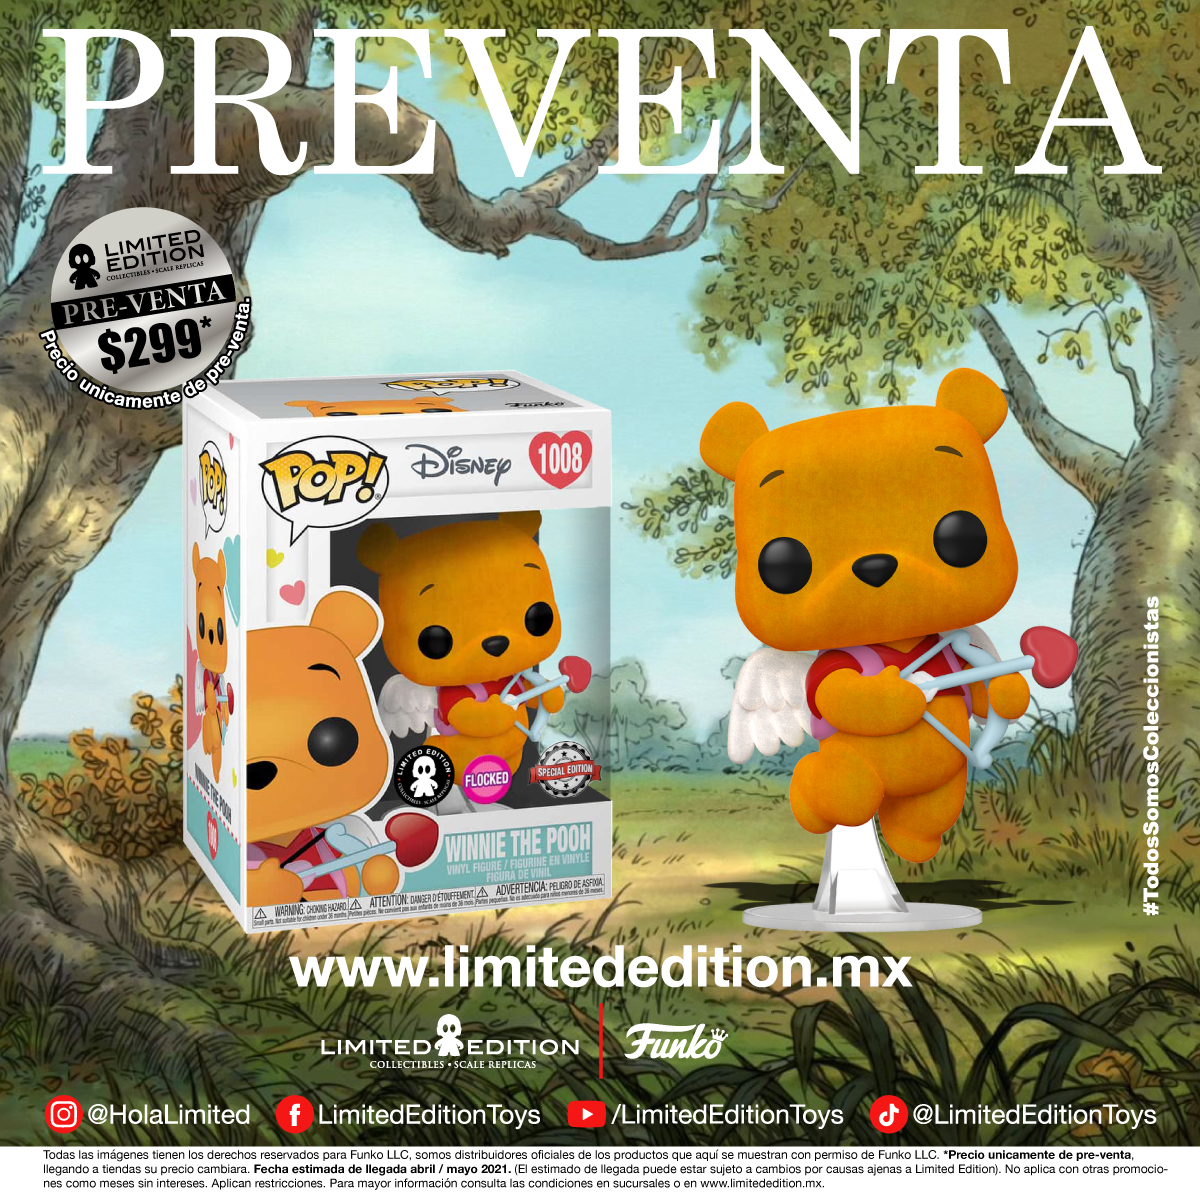 limited-edition-preventa-winnie-1200x1200